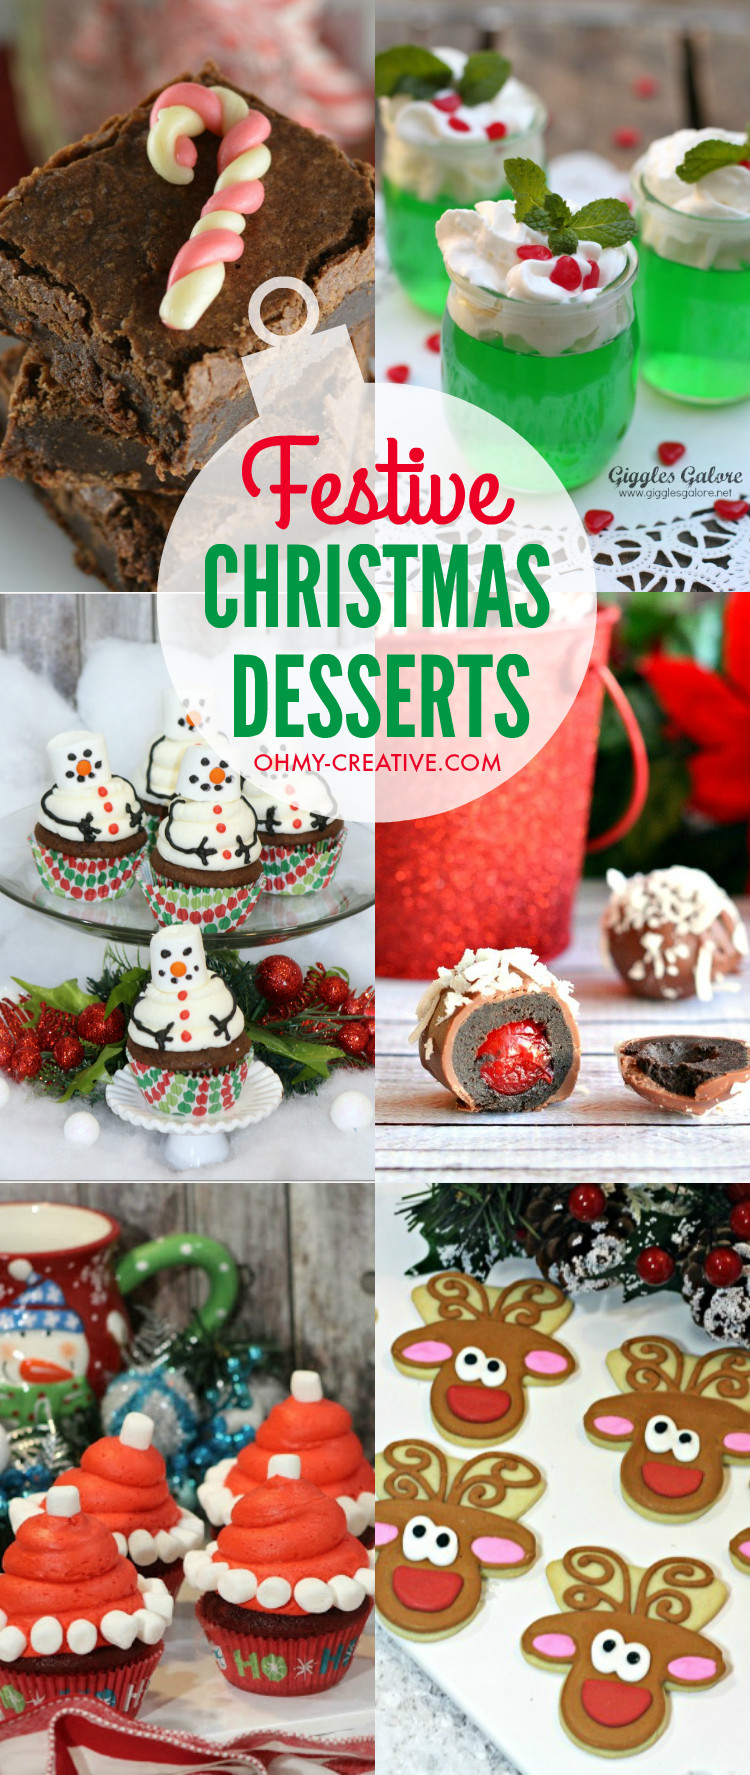 Festive Christmas Desserts
 Festive Christmas Desserts Oh My Creative